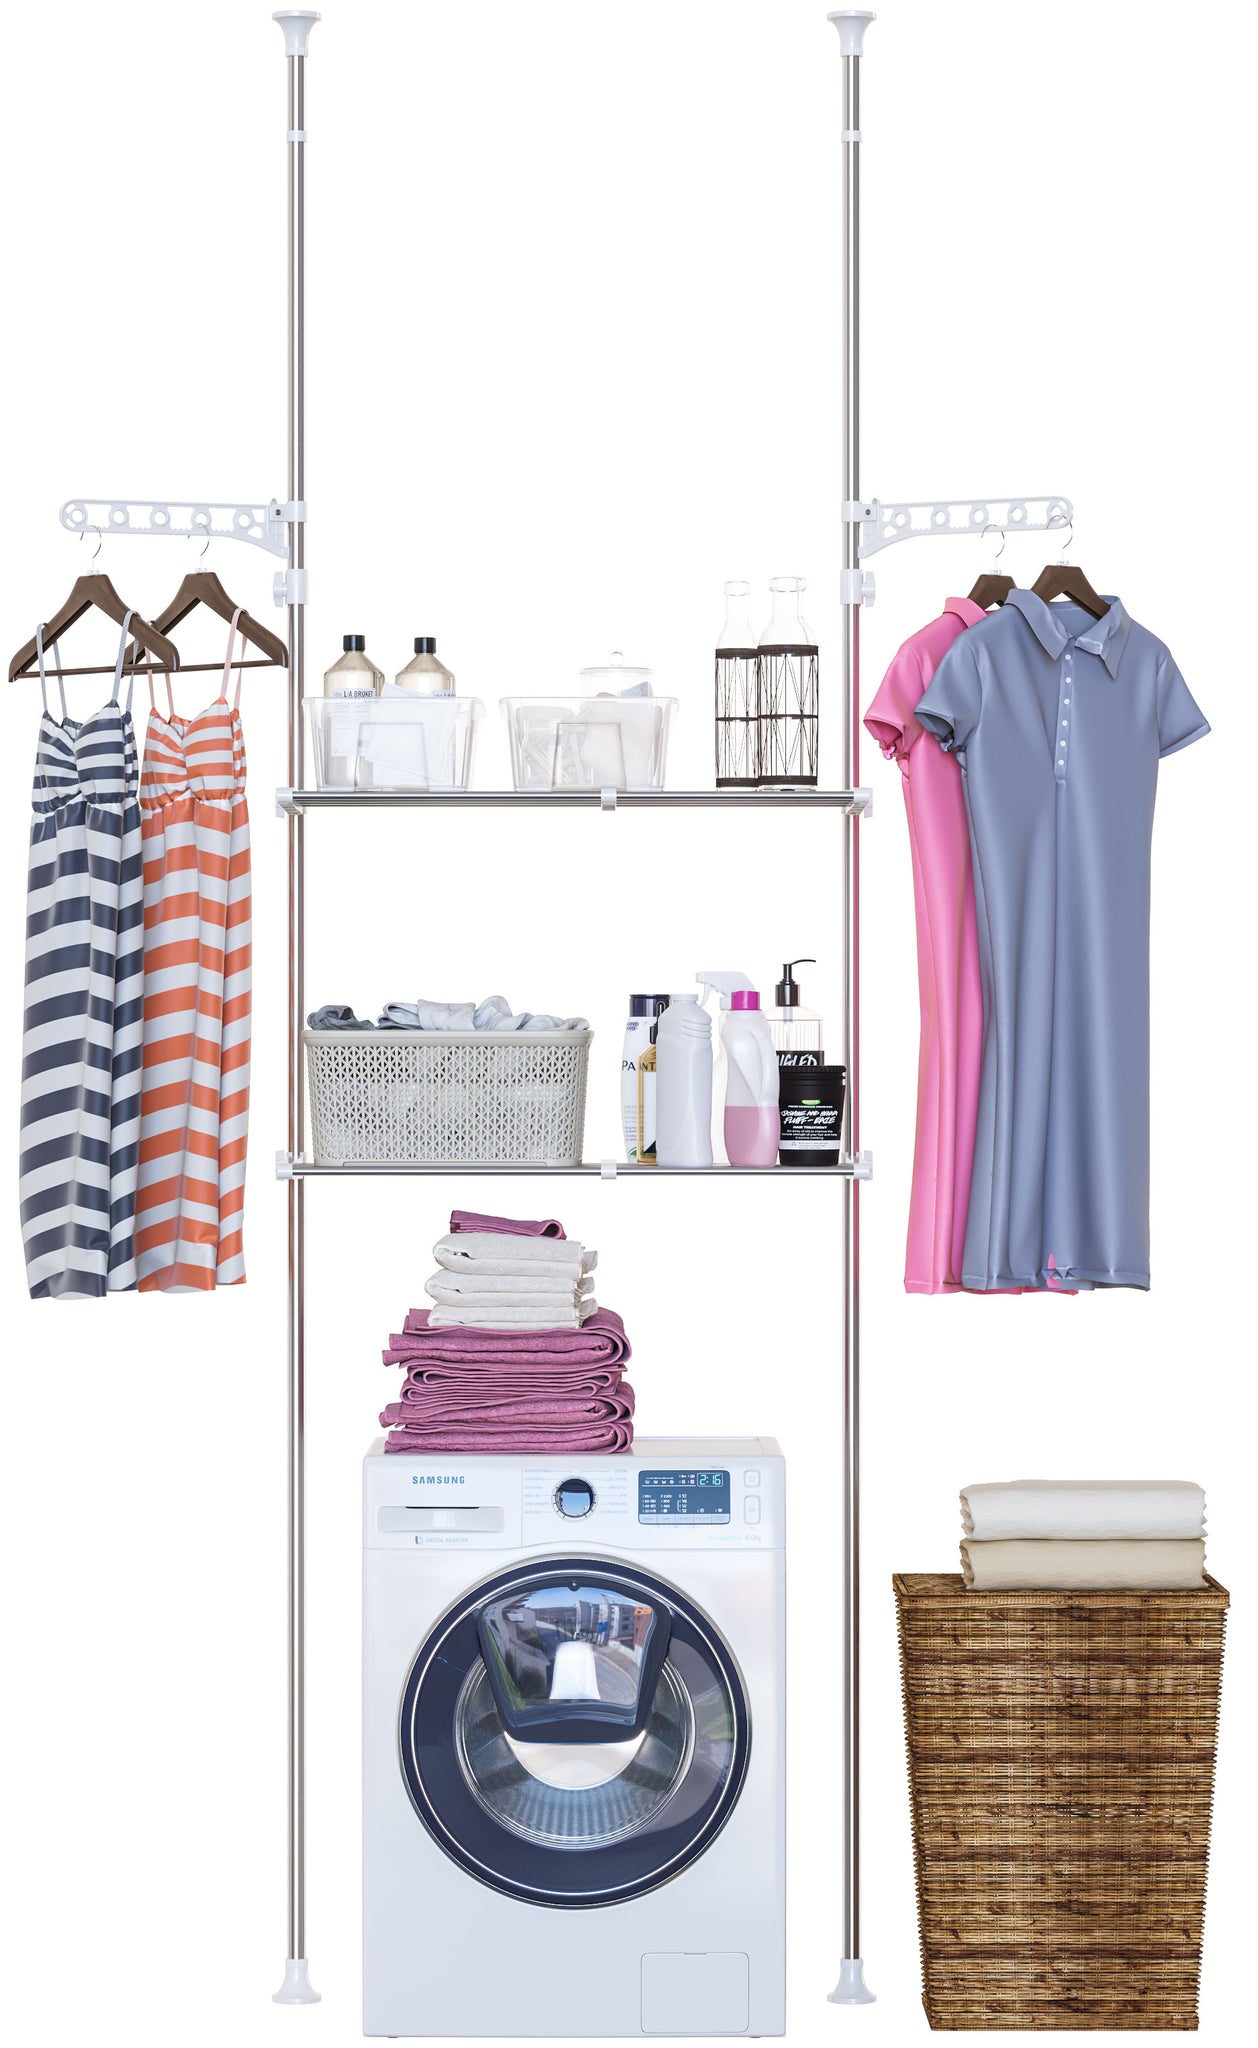 Clothes Over Washer and Dryer Rack Wire Basket Adjustable Shelves